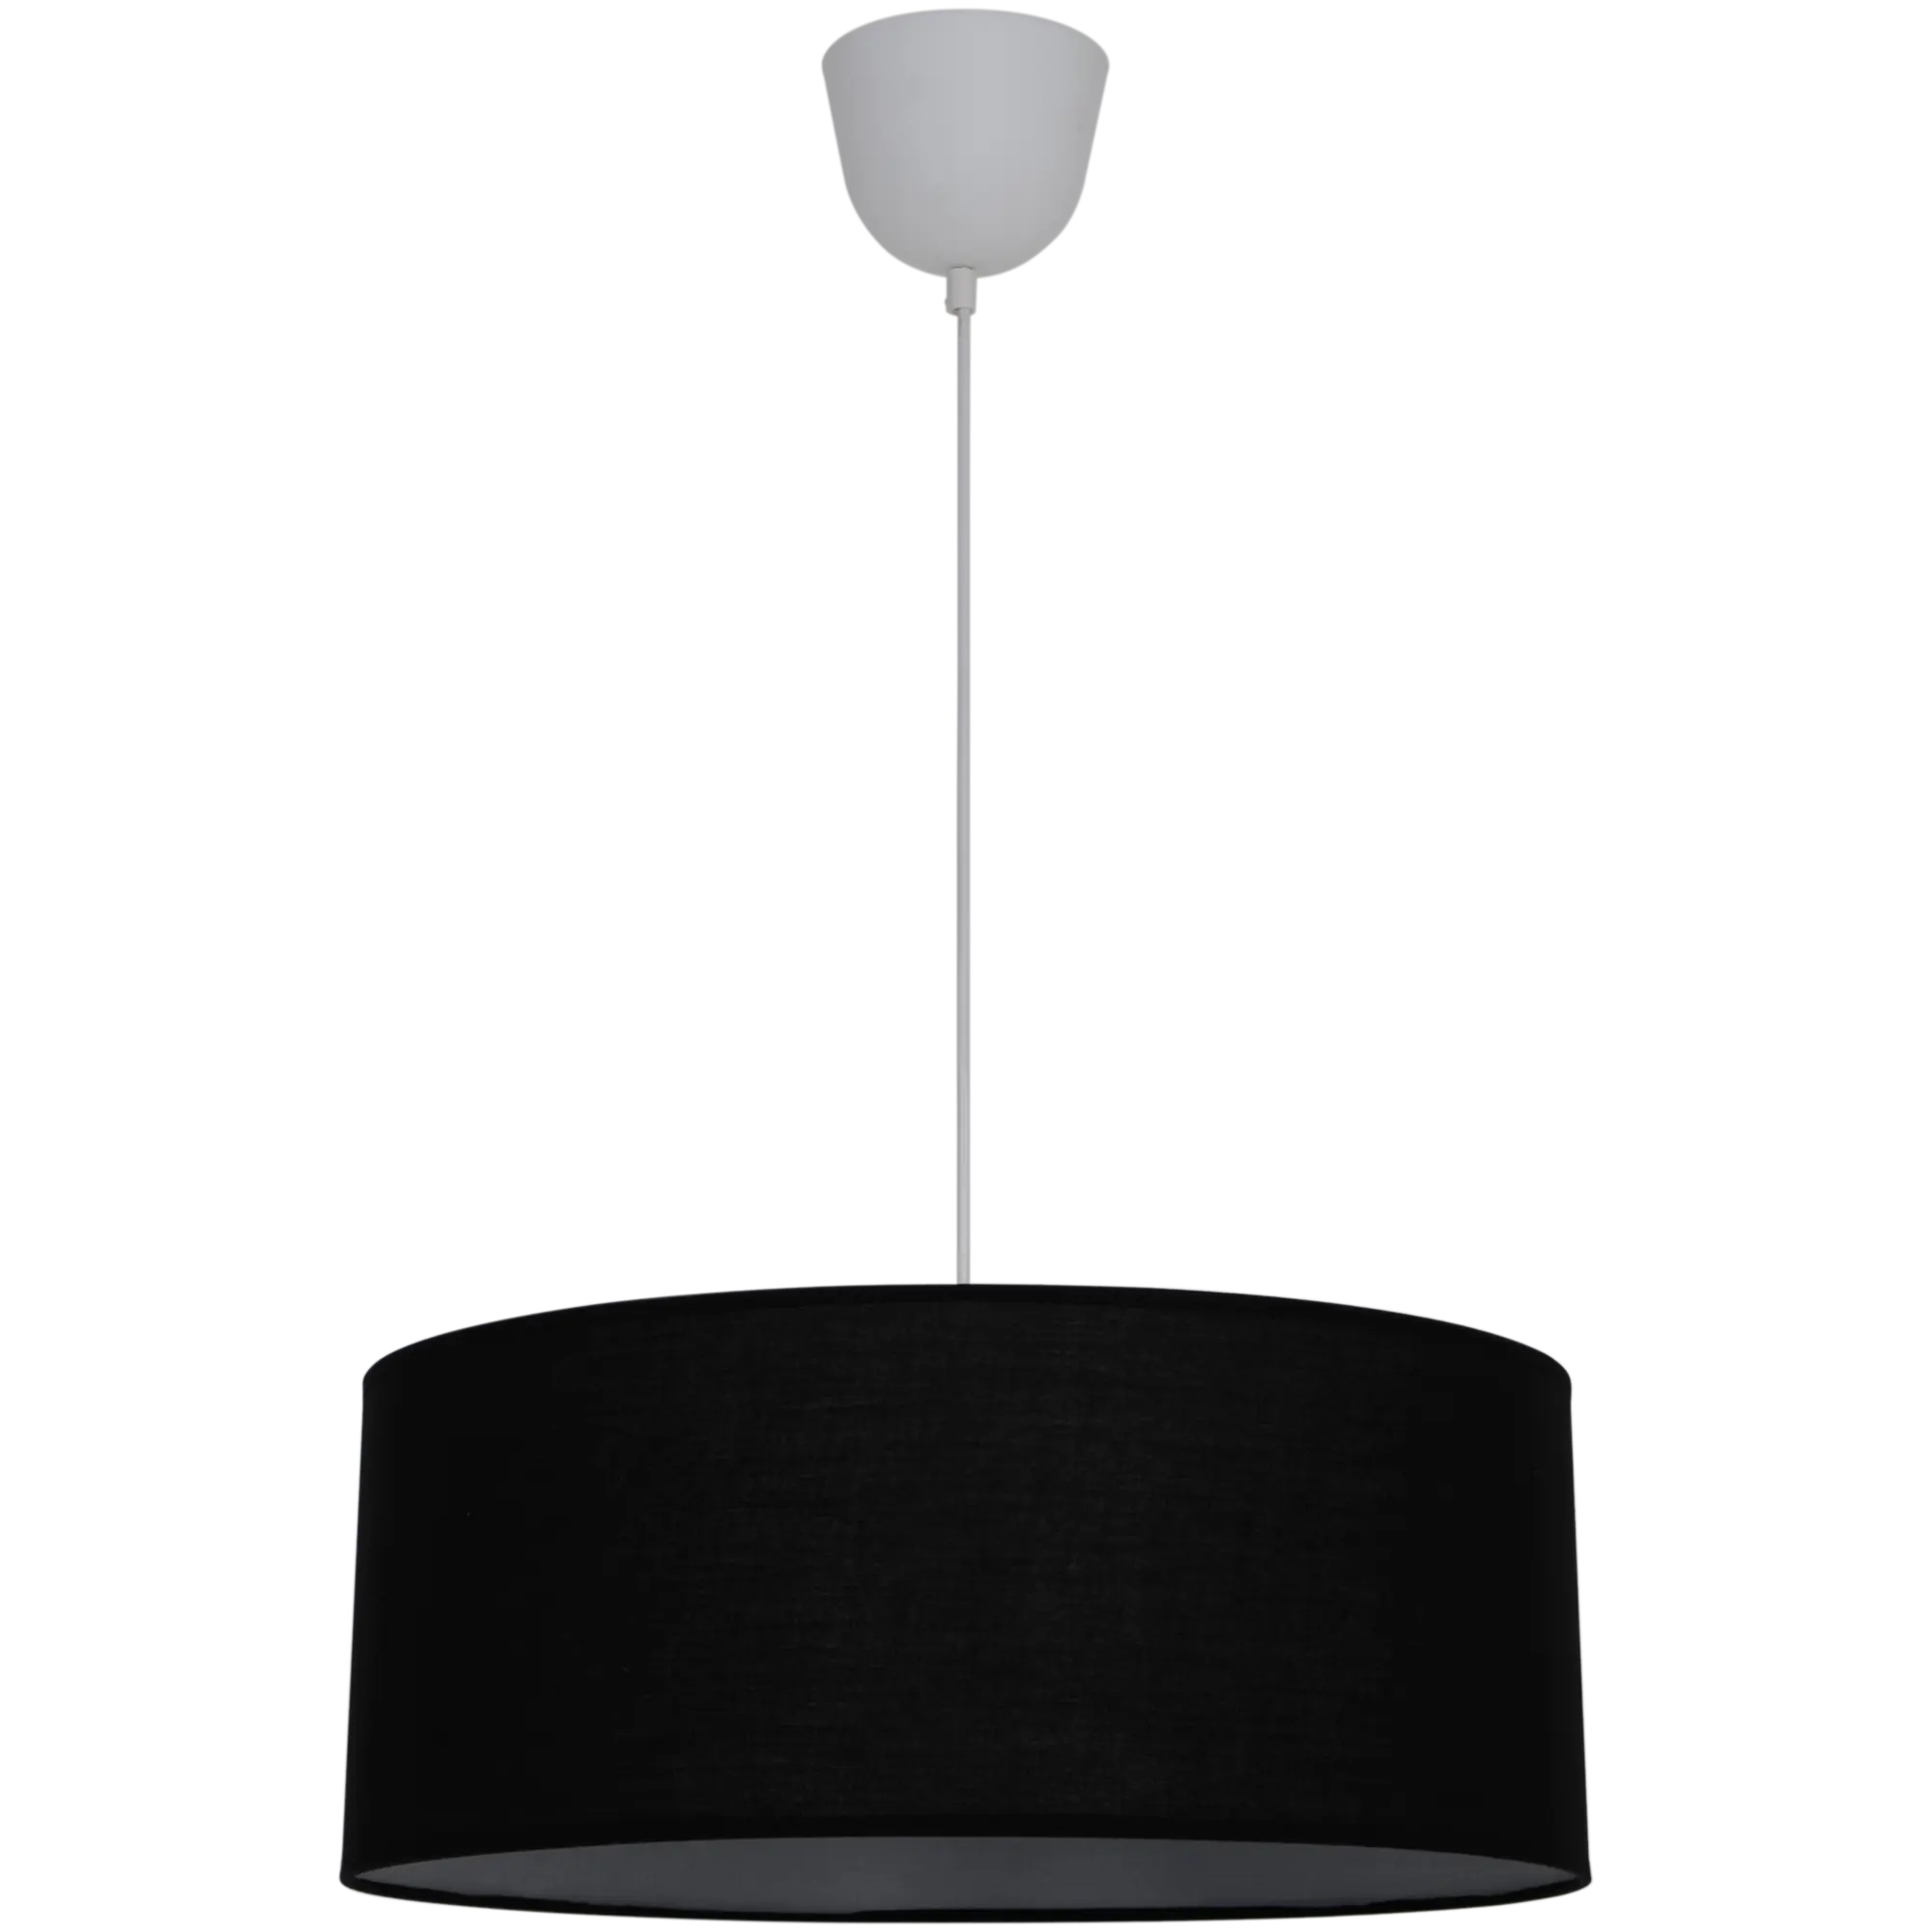 Lampadario Moderno Sitia nero in cotone, D. 48 cm, L. 19 cm, 3 luci, INSPIRE - 6